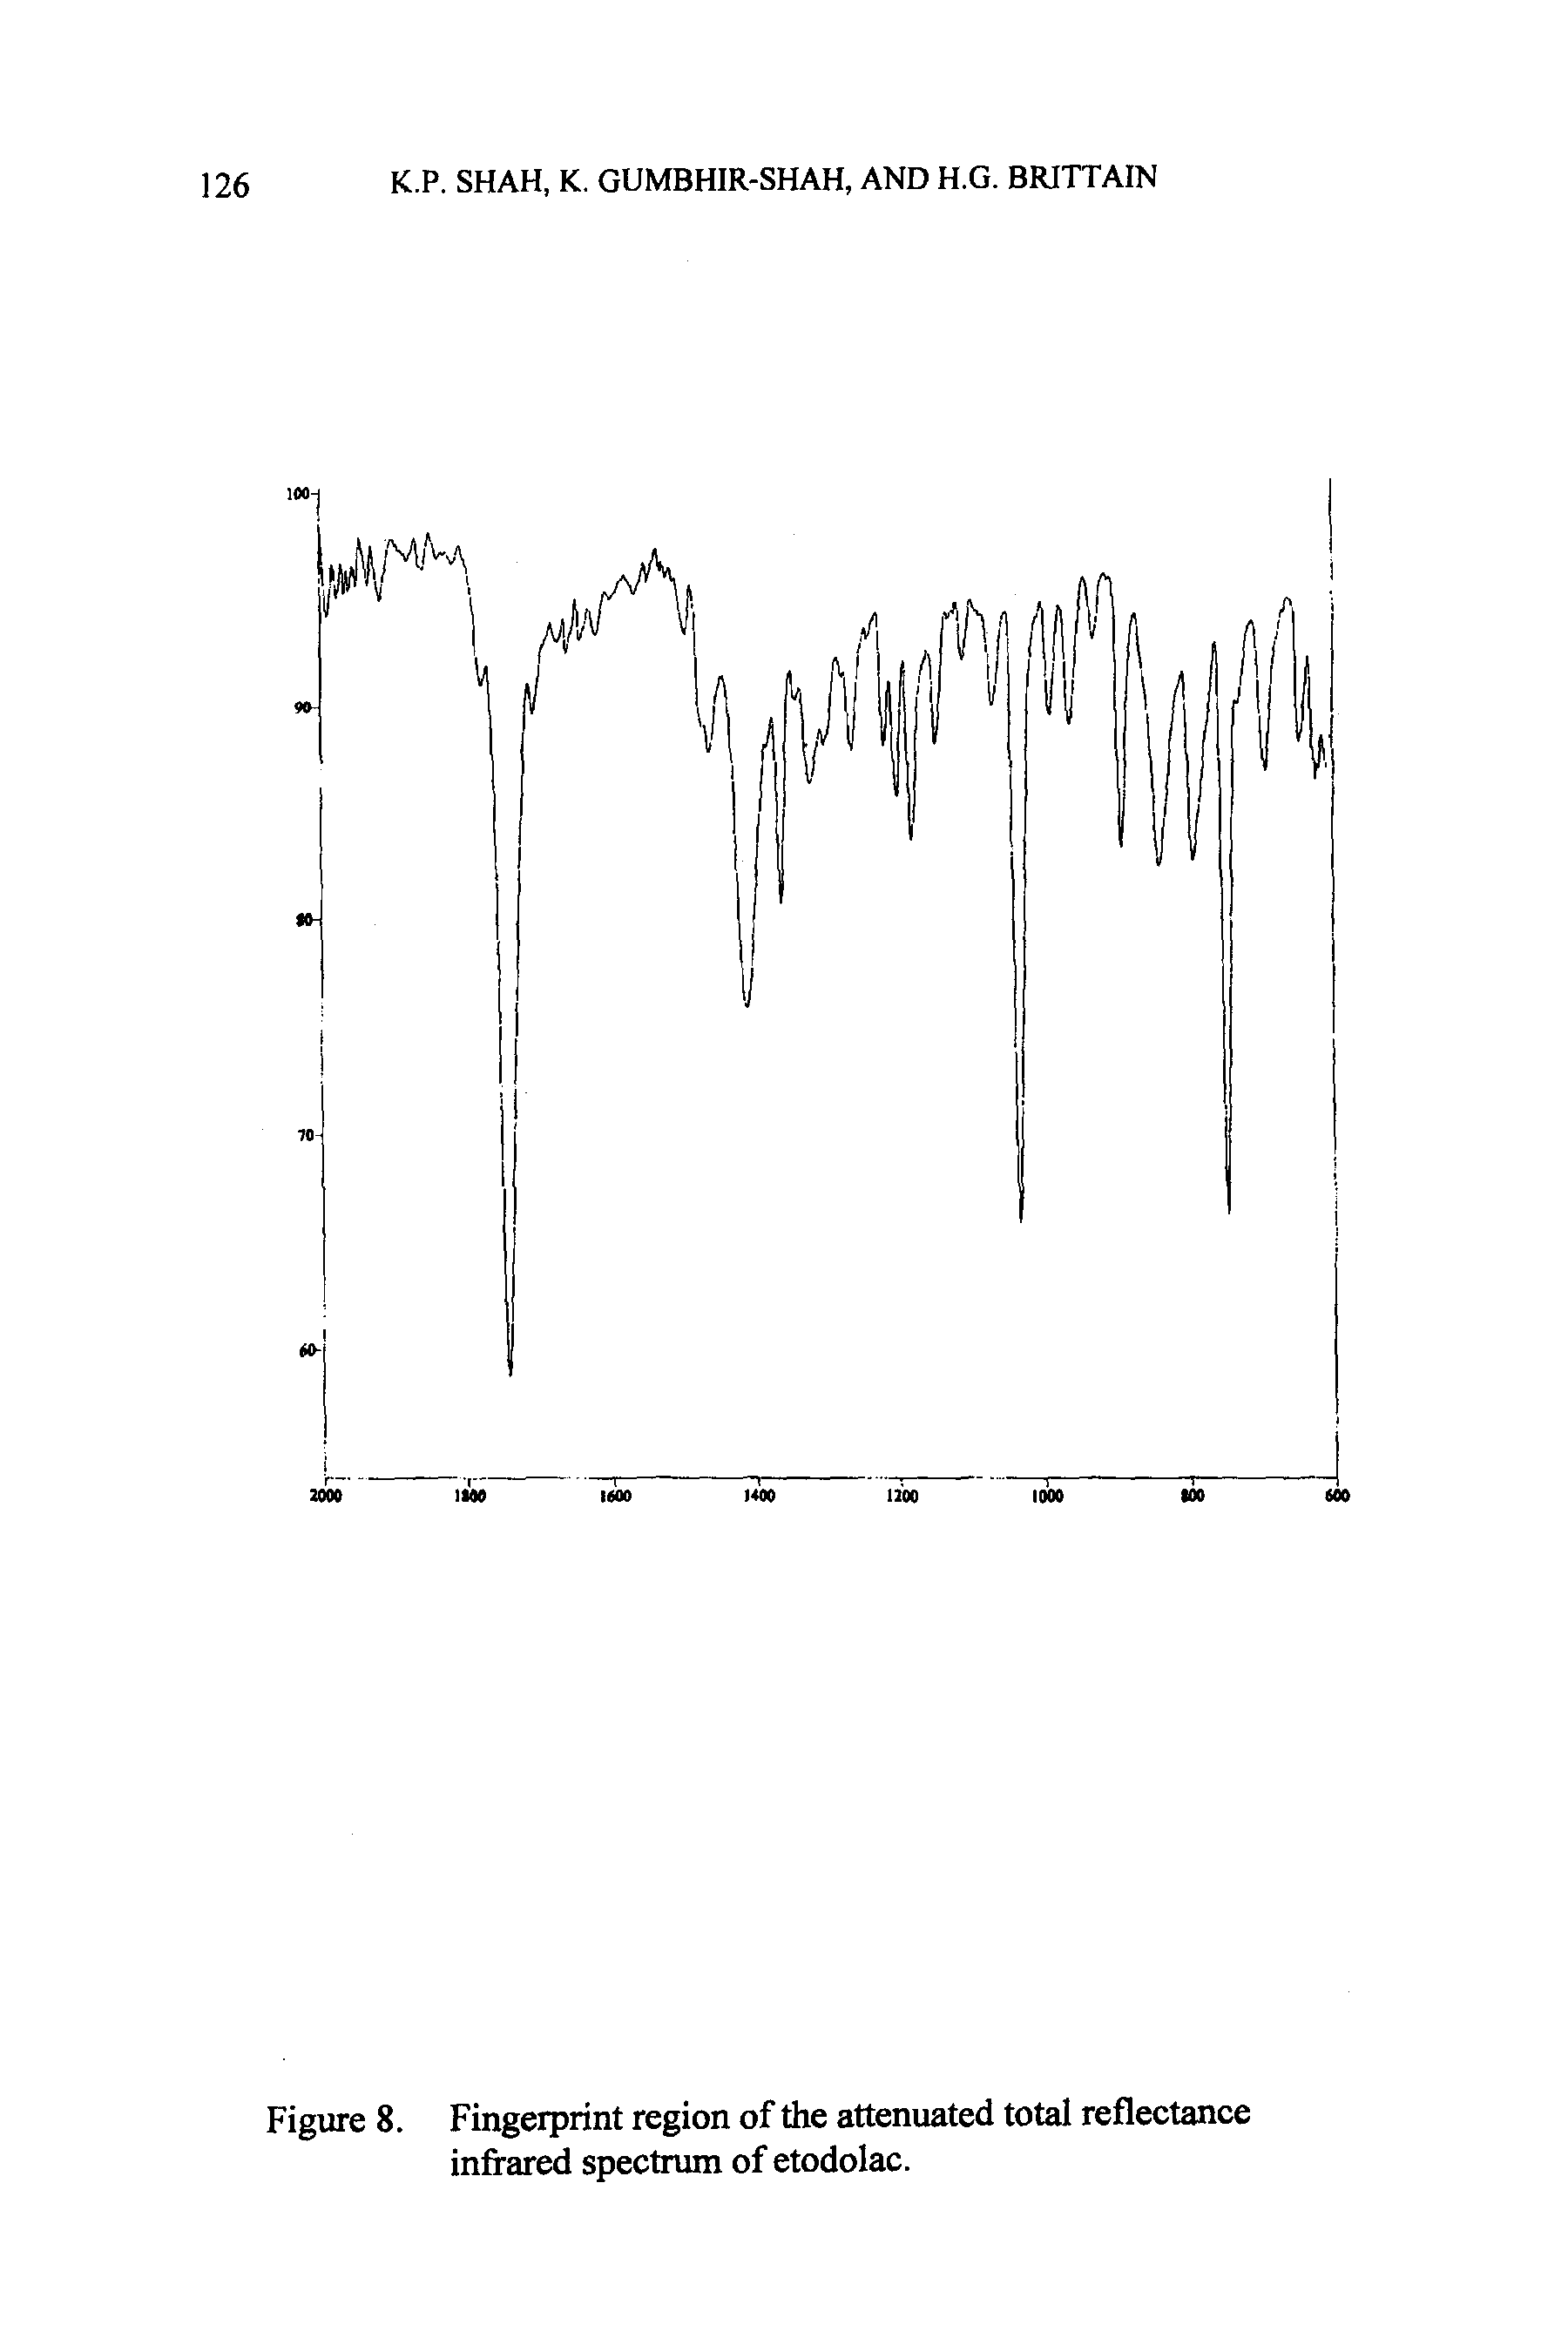 Figure 8. Fingerprint region of the attenuated total reflectance infrared spectrum of etodolac.